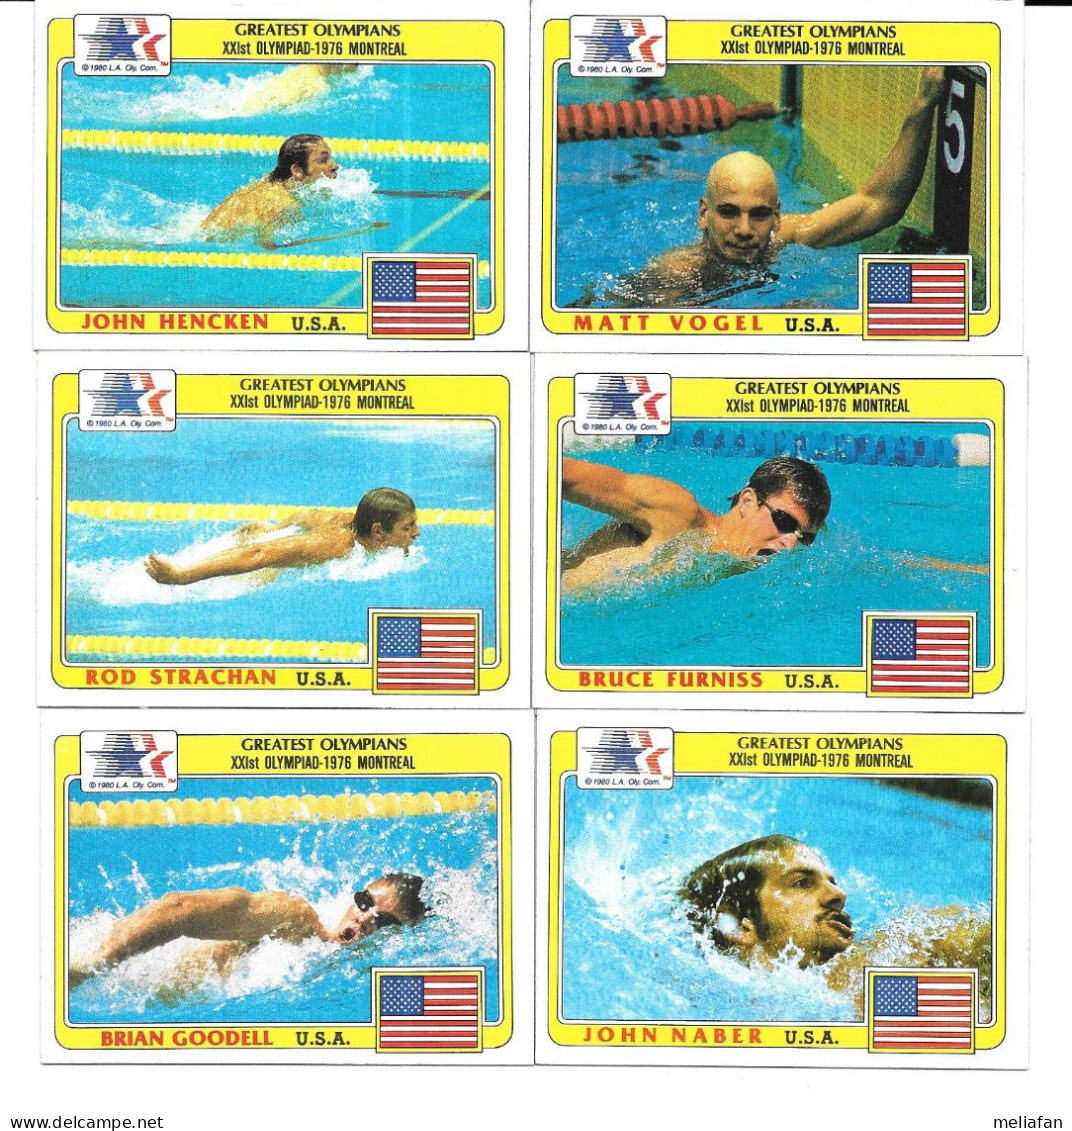 DH77 - GREATEST OLYMPIANS - JOHN NABER - BRIAN GOODELL - BRUCE FURNISS - ROD STRACHAN - MATT VOGEL - JOHN HENCKEN - Swimming